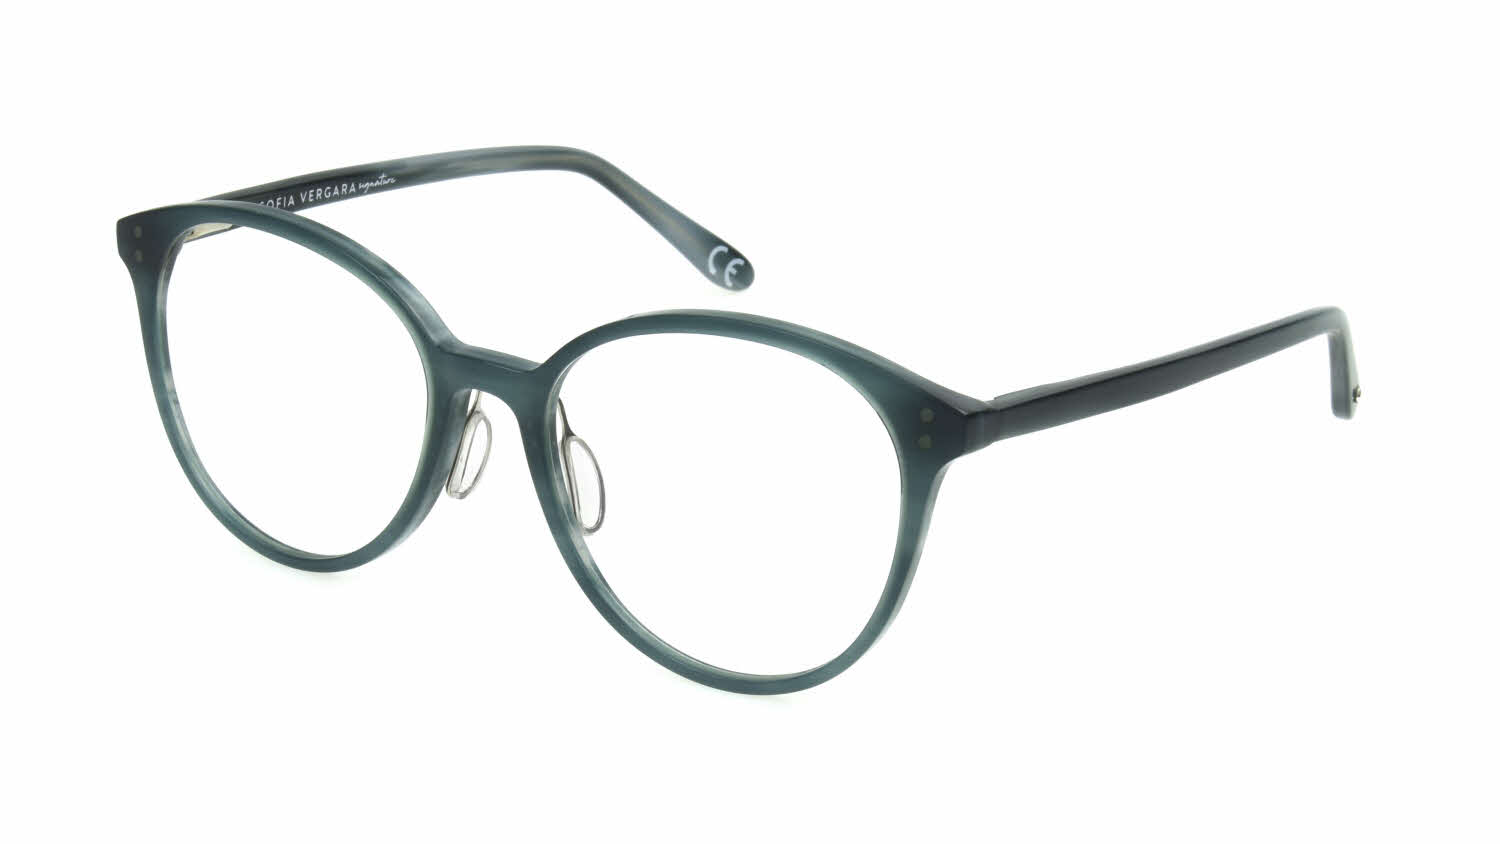 Sofia Vergara Pepita Eyeglasses | Free Shipping